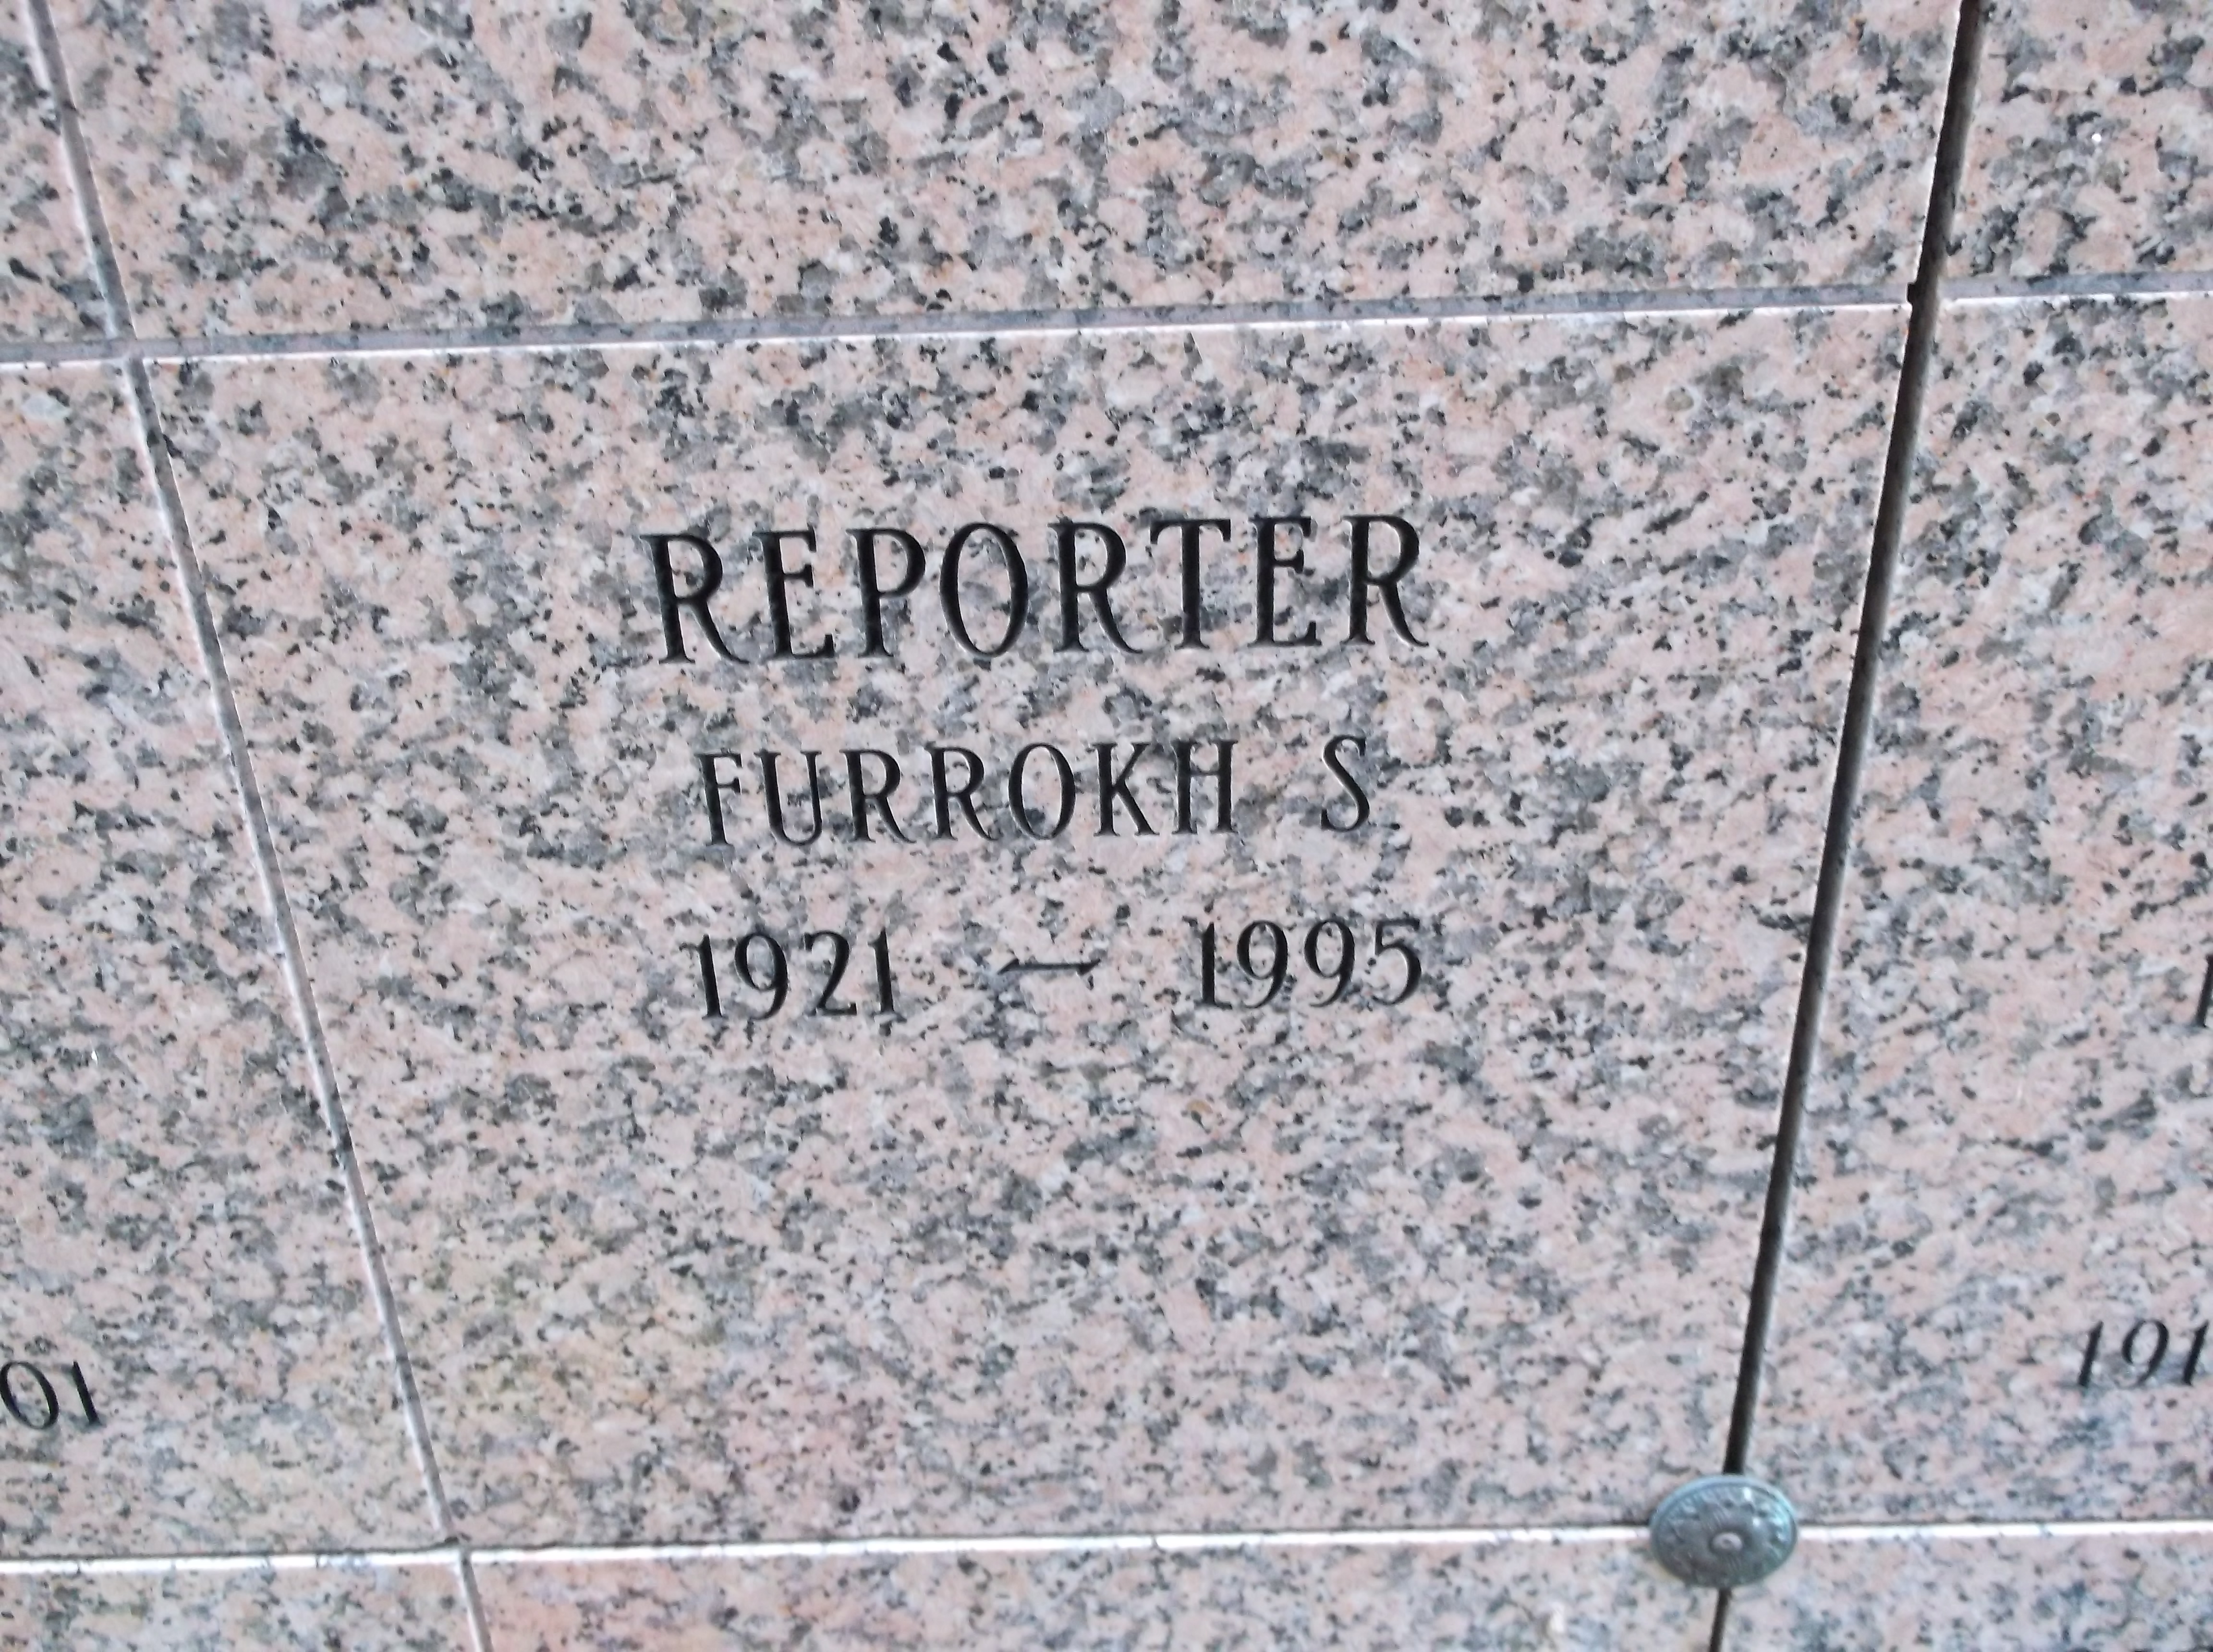 Furrokh S Reporter